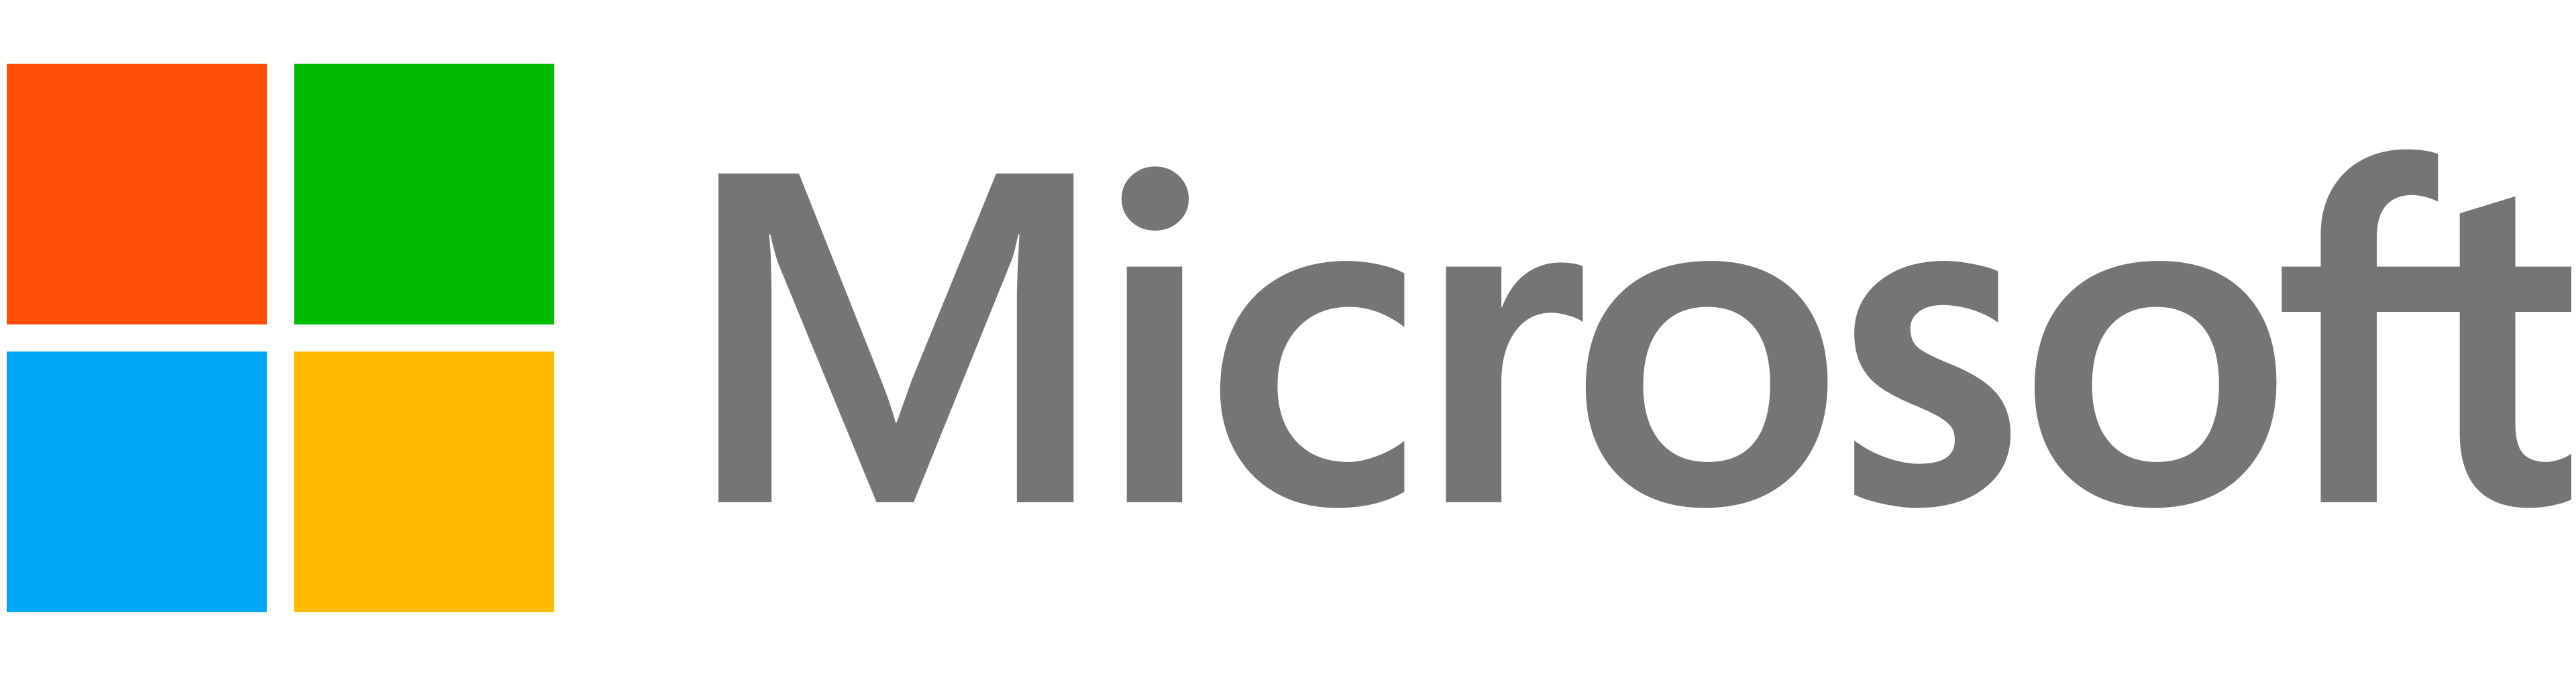 Logo-microsoft